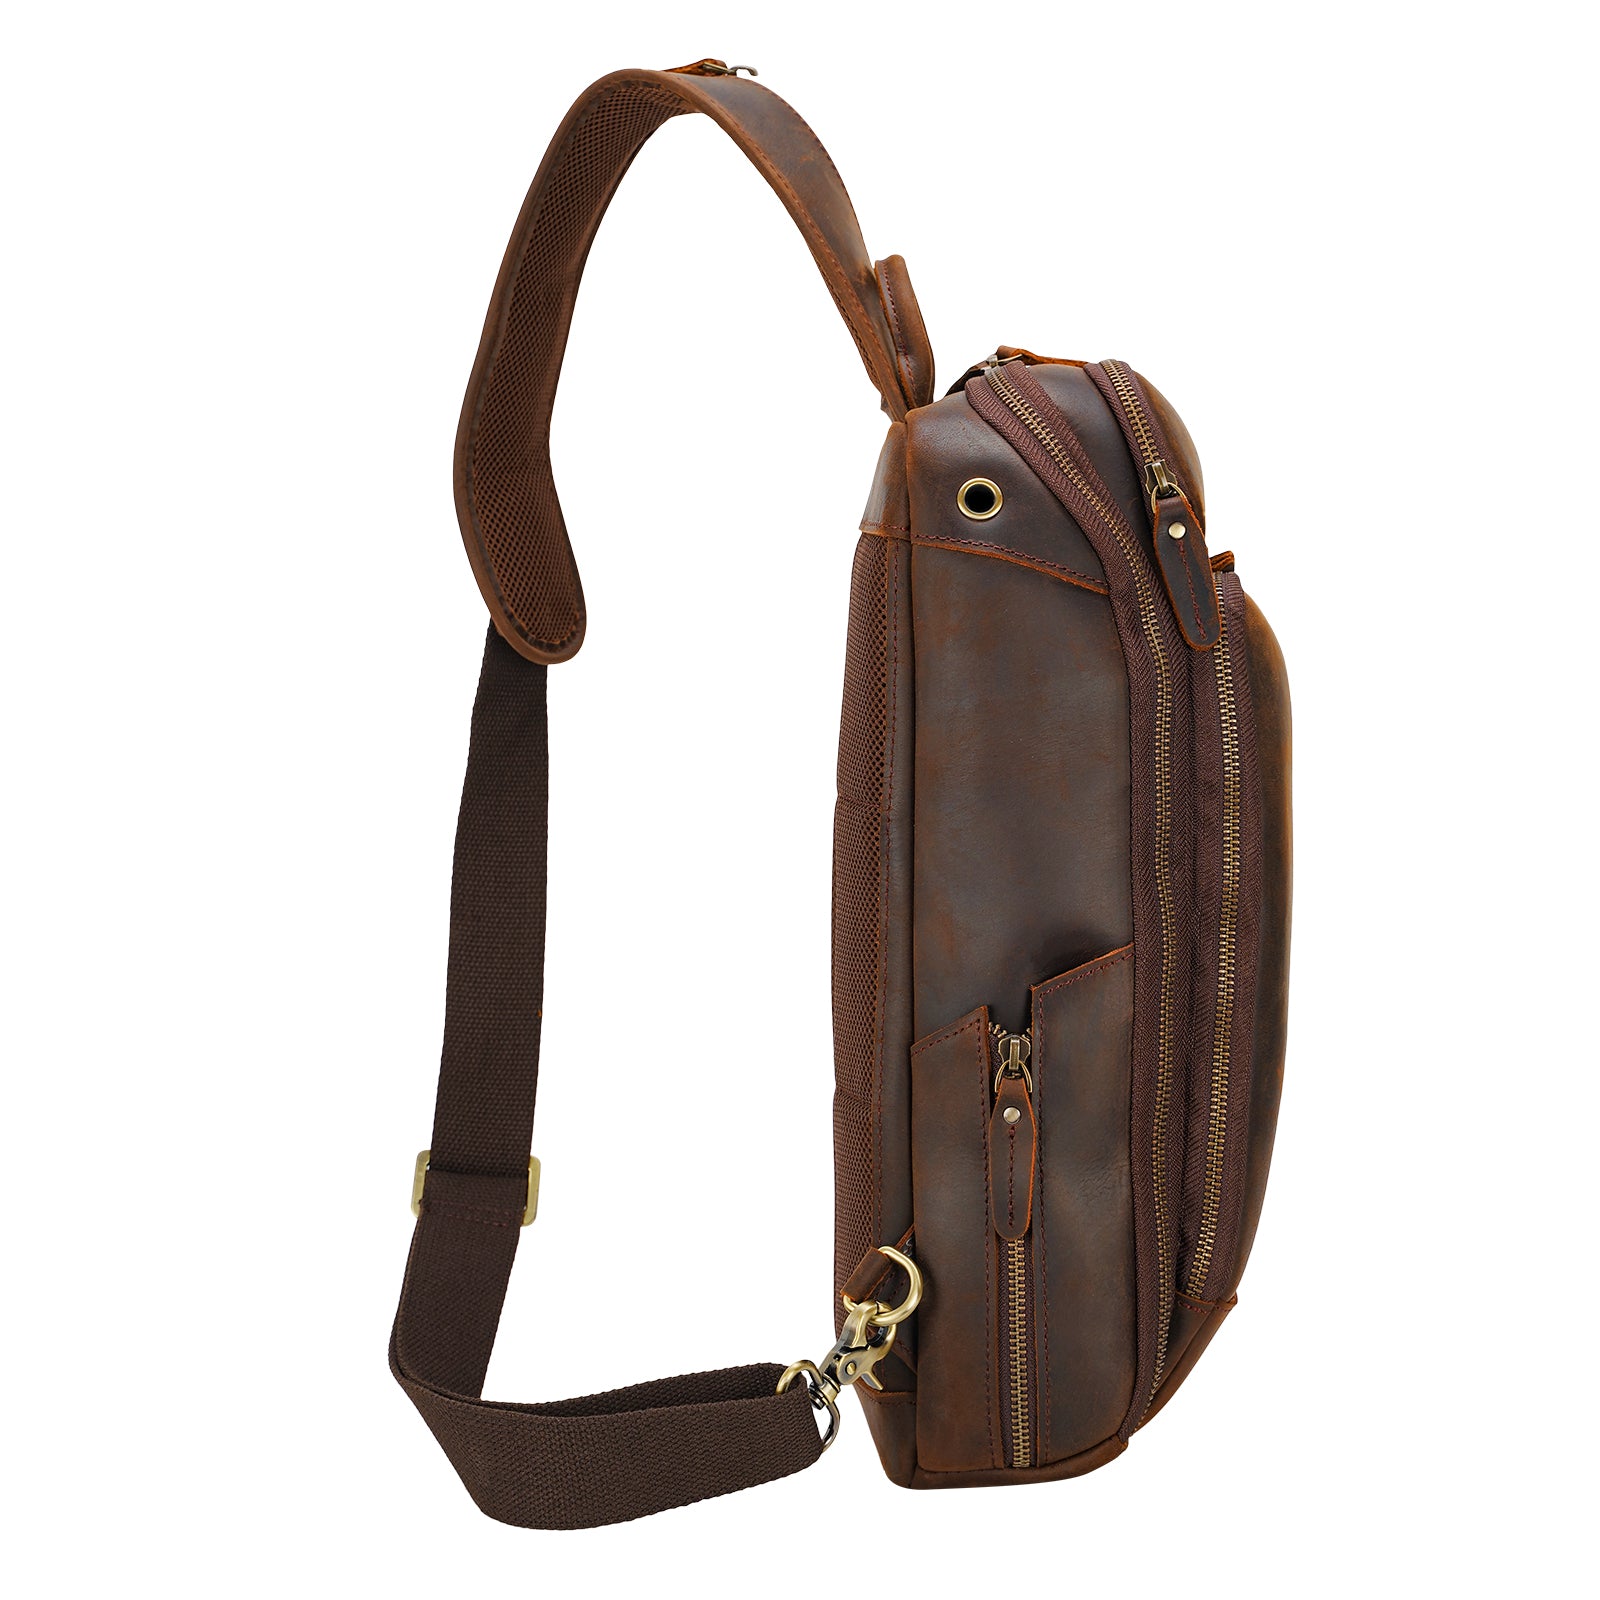 Polare Modern Style Leather Sling Shoulder Bag Travel/Hiking Daypack (Profile)